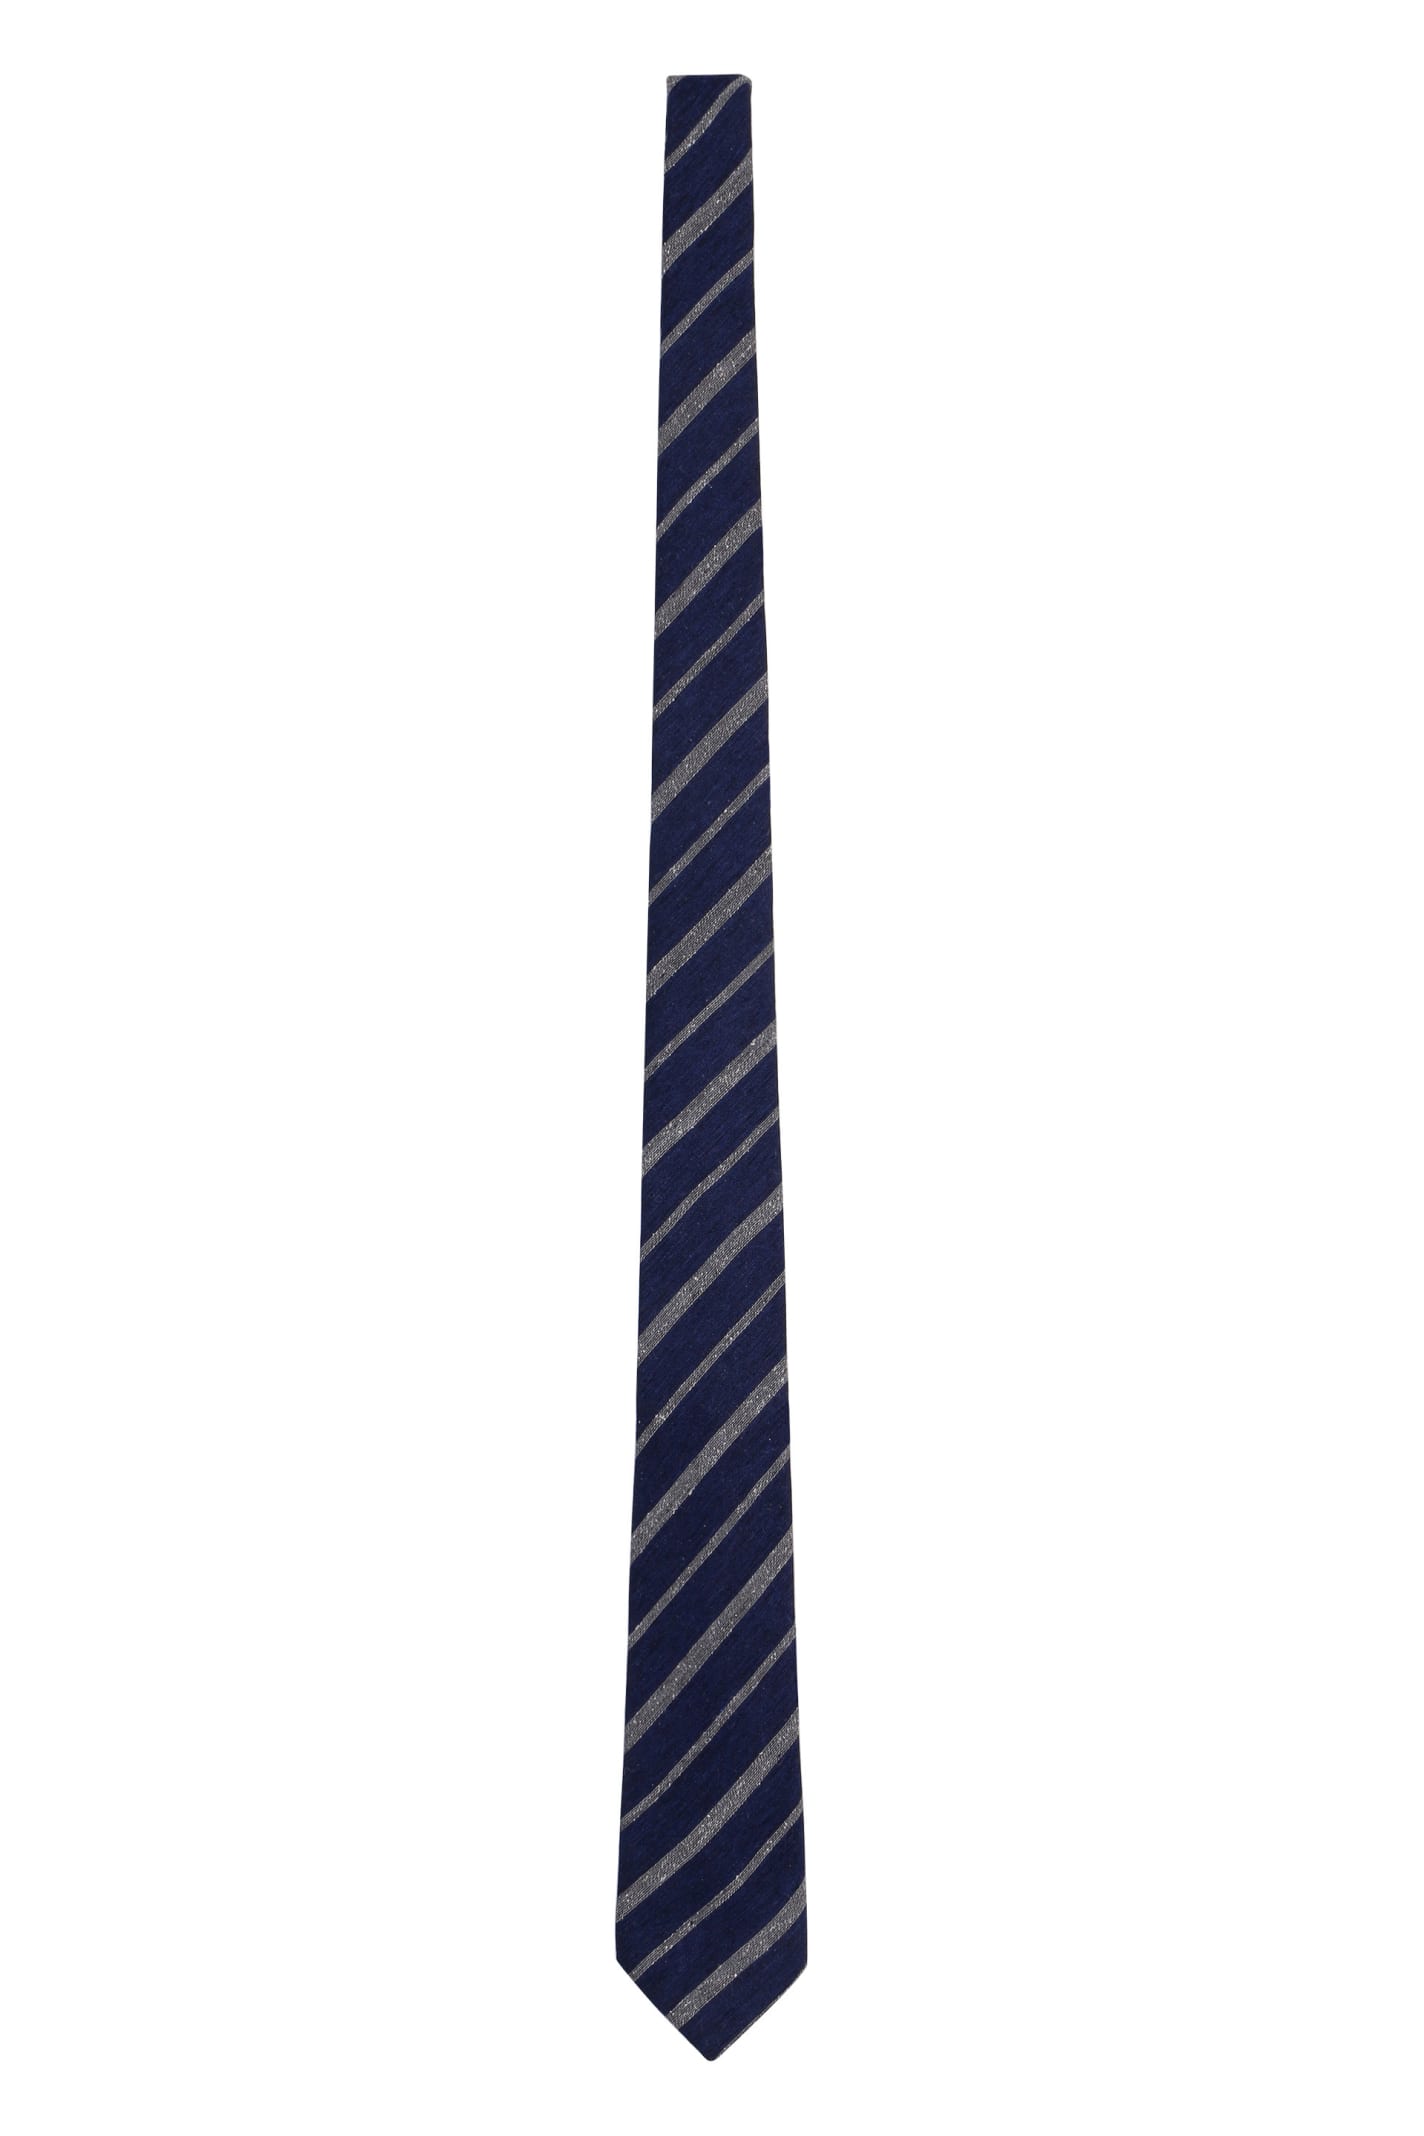 Z Zegna Striped Silk-wool Blend Tie